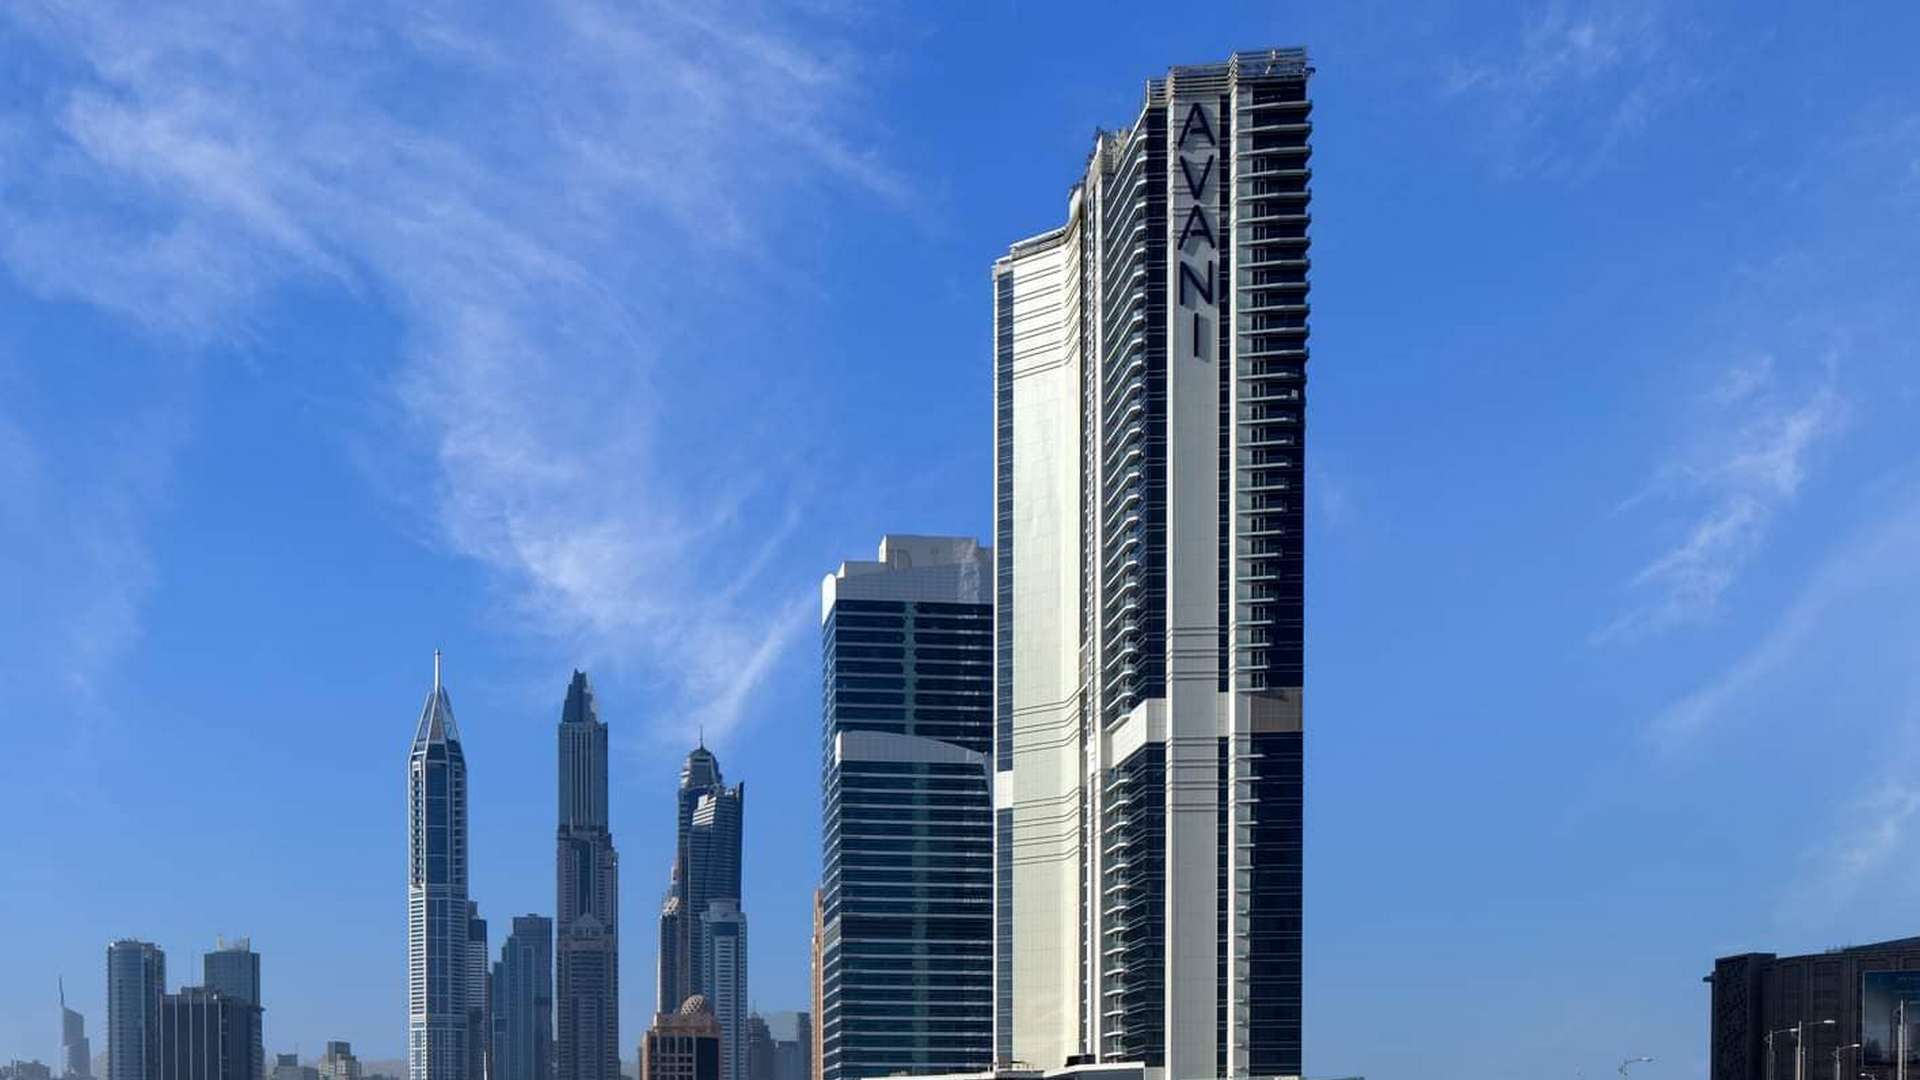 AVANI PALM VIEW by AVANI Hotels & Resorts in Palm Jumeirah, Dubai, UAE